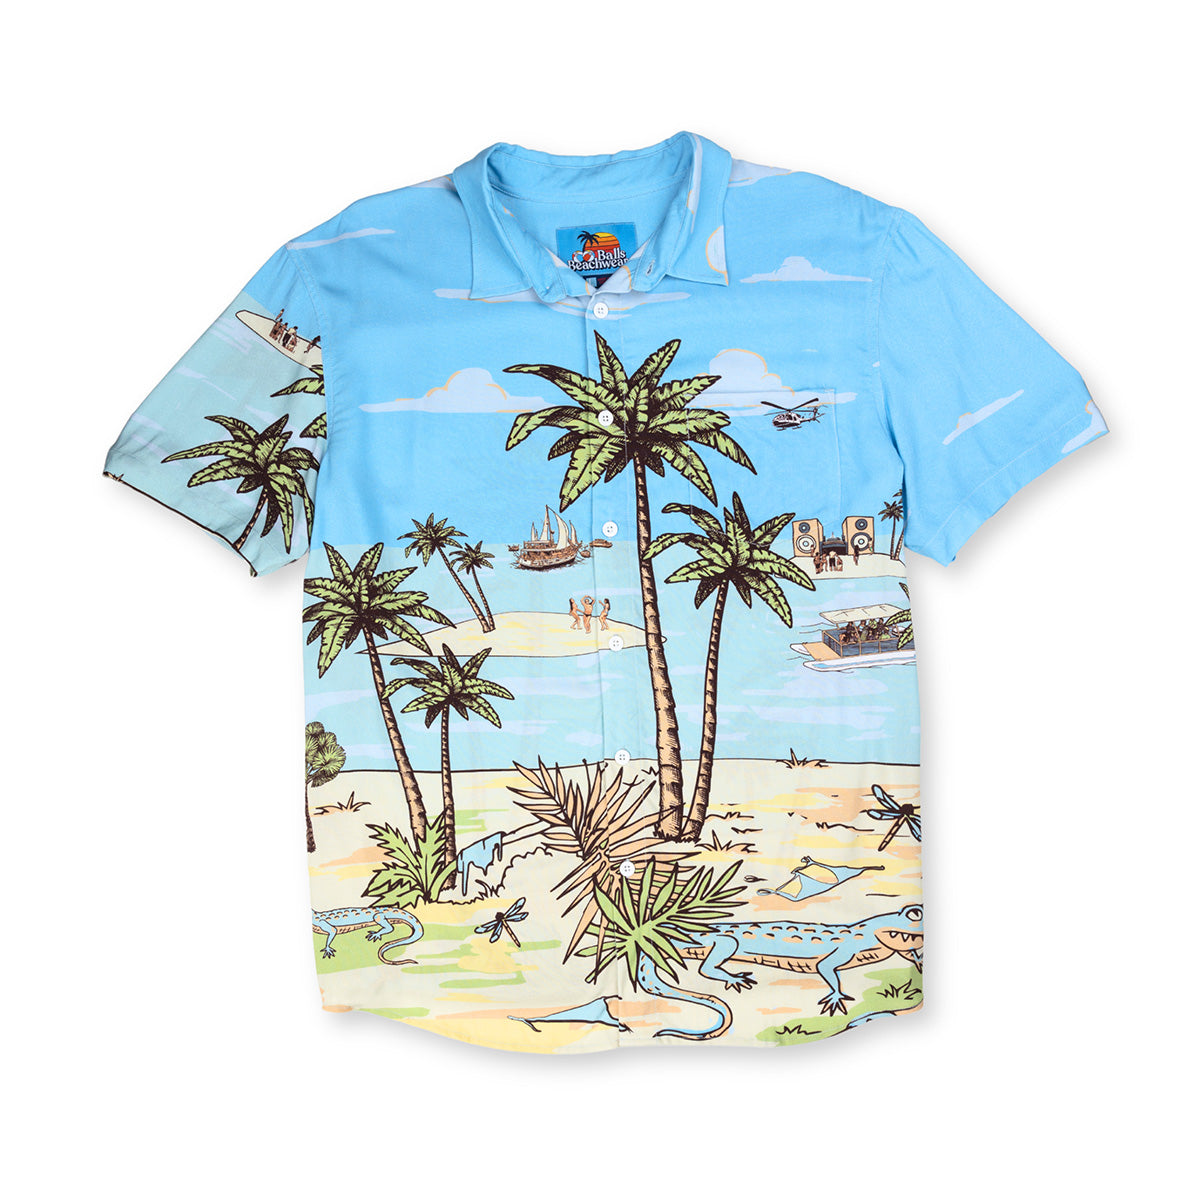 Balls Beachwear Party Island Button Up-T-Shirts-Balls Beachwear-Light Blue-S-Barstool Sports